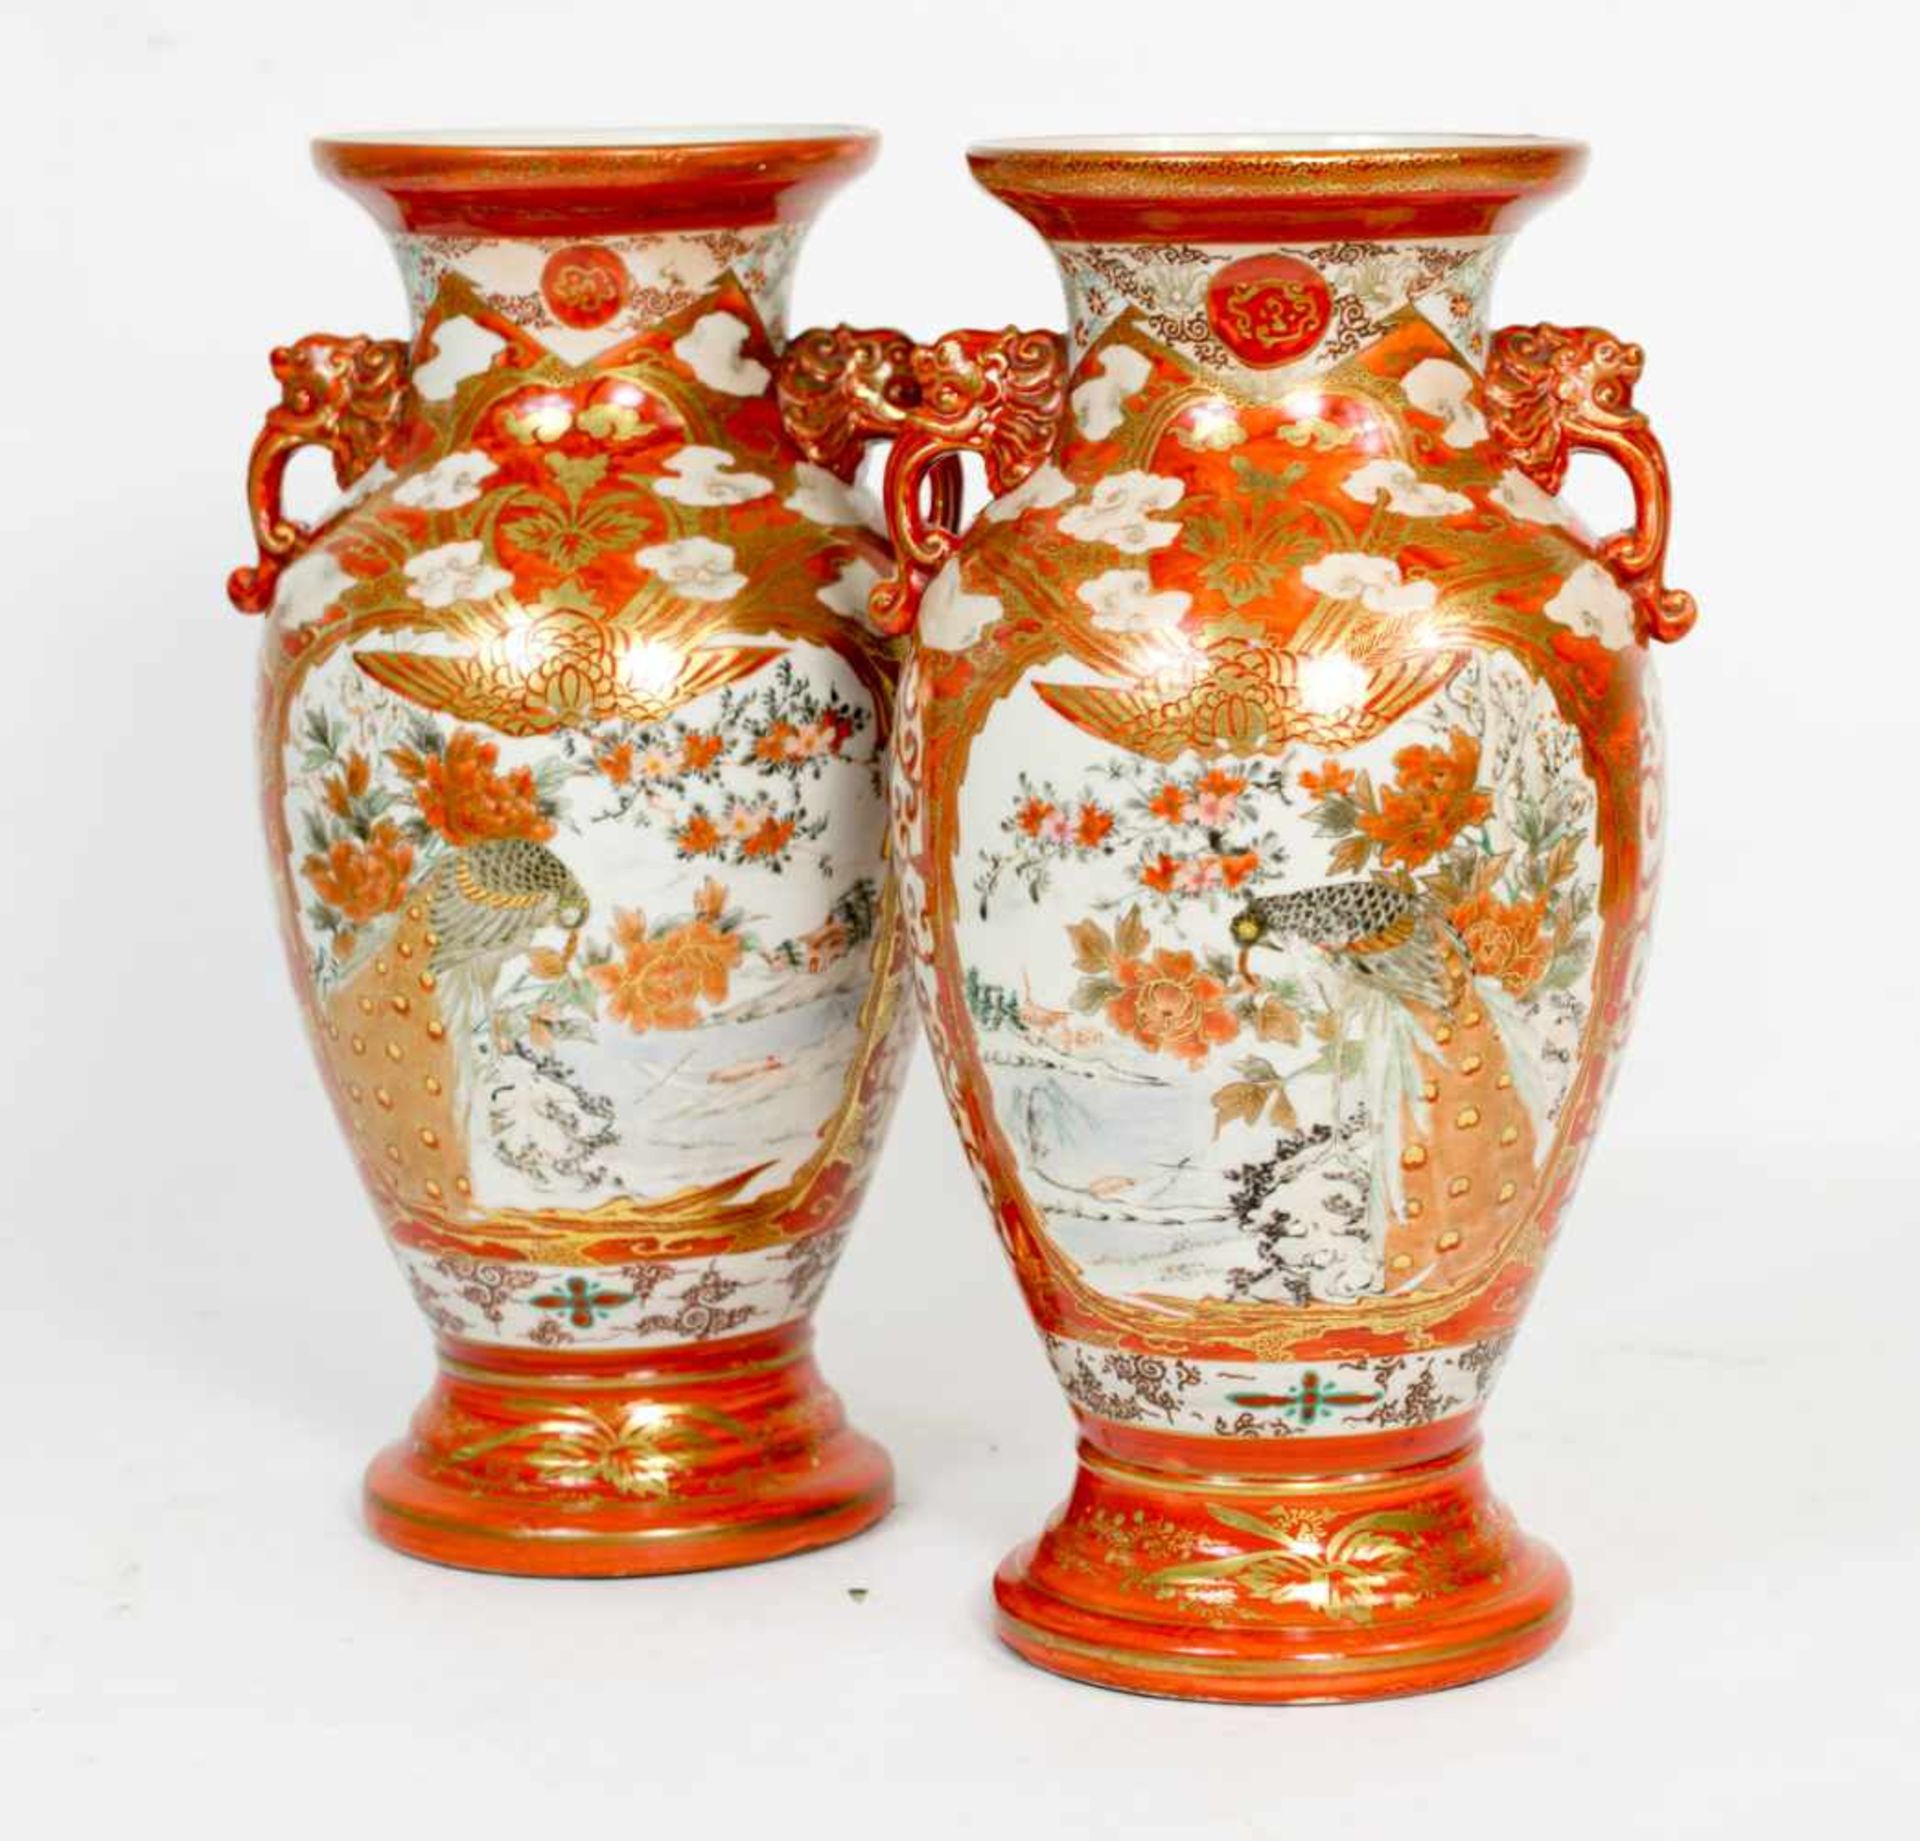 Paar Vasen SatsumaJapan, 1. Hälfte 19. Jh., Pozellan, Höhe 35 cm, eine Vase gerissen - Image 4 of 5